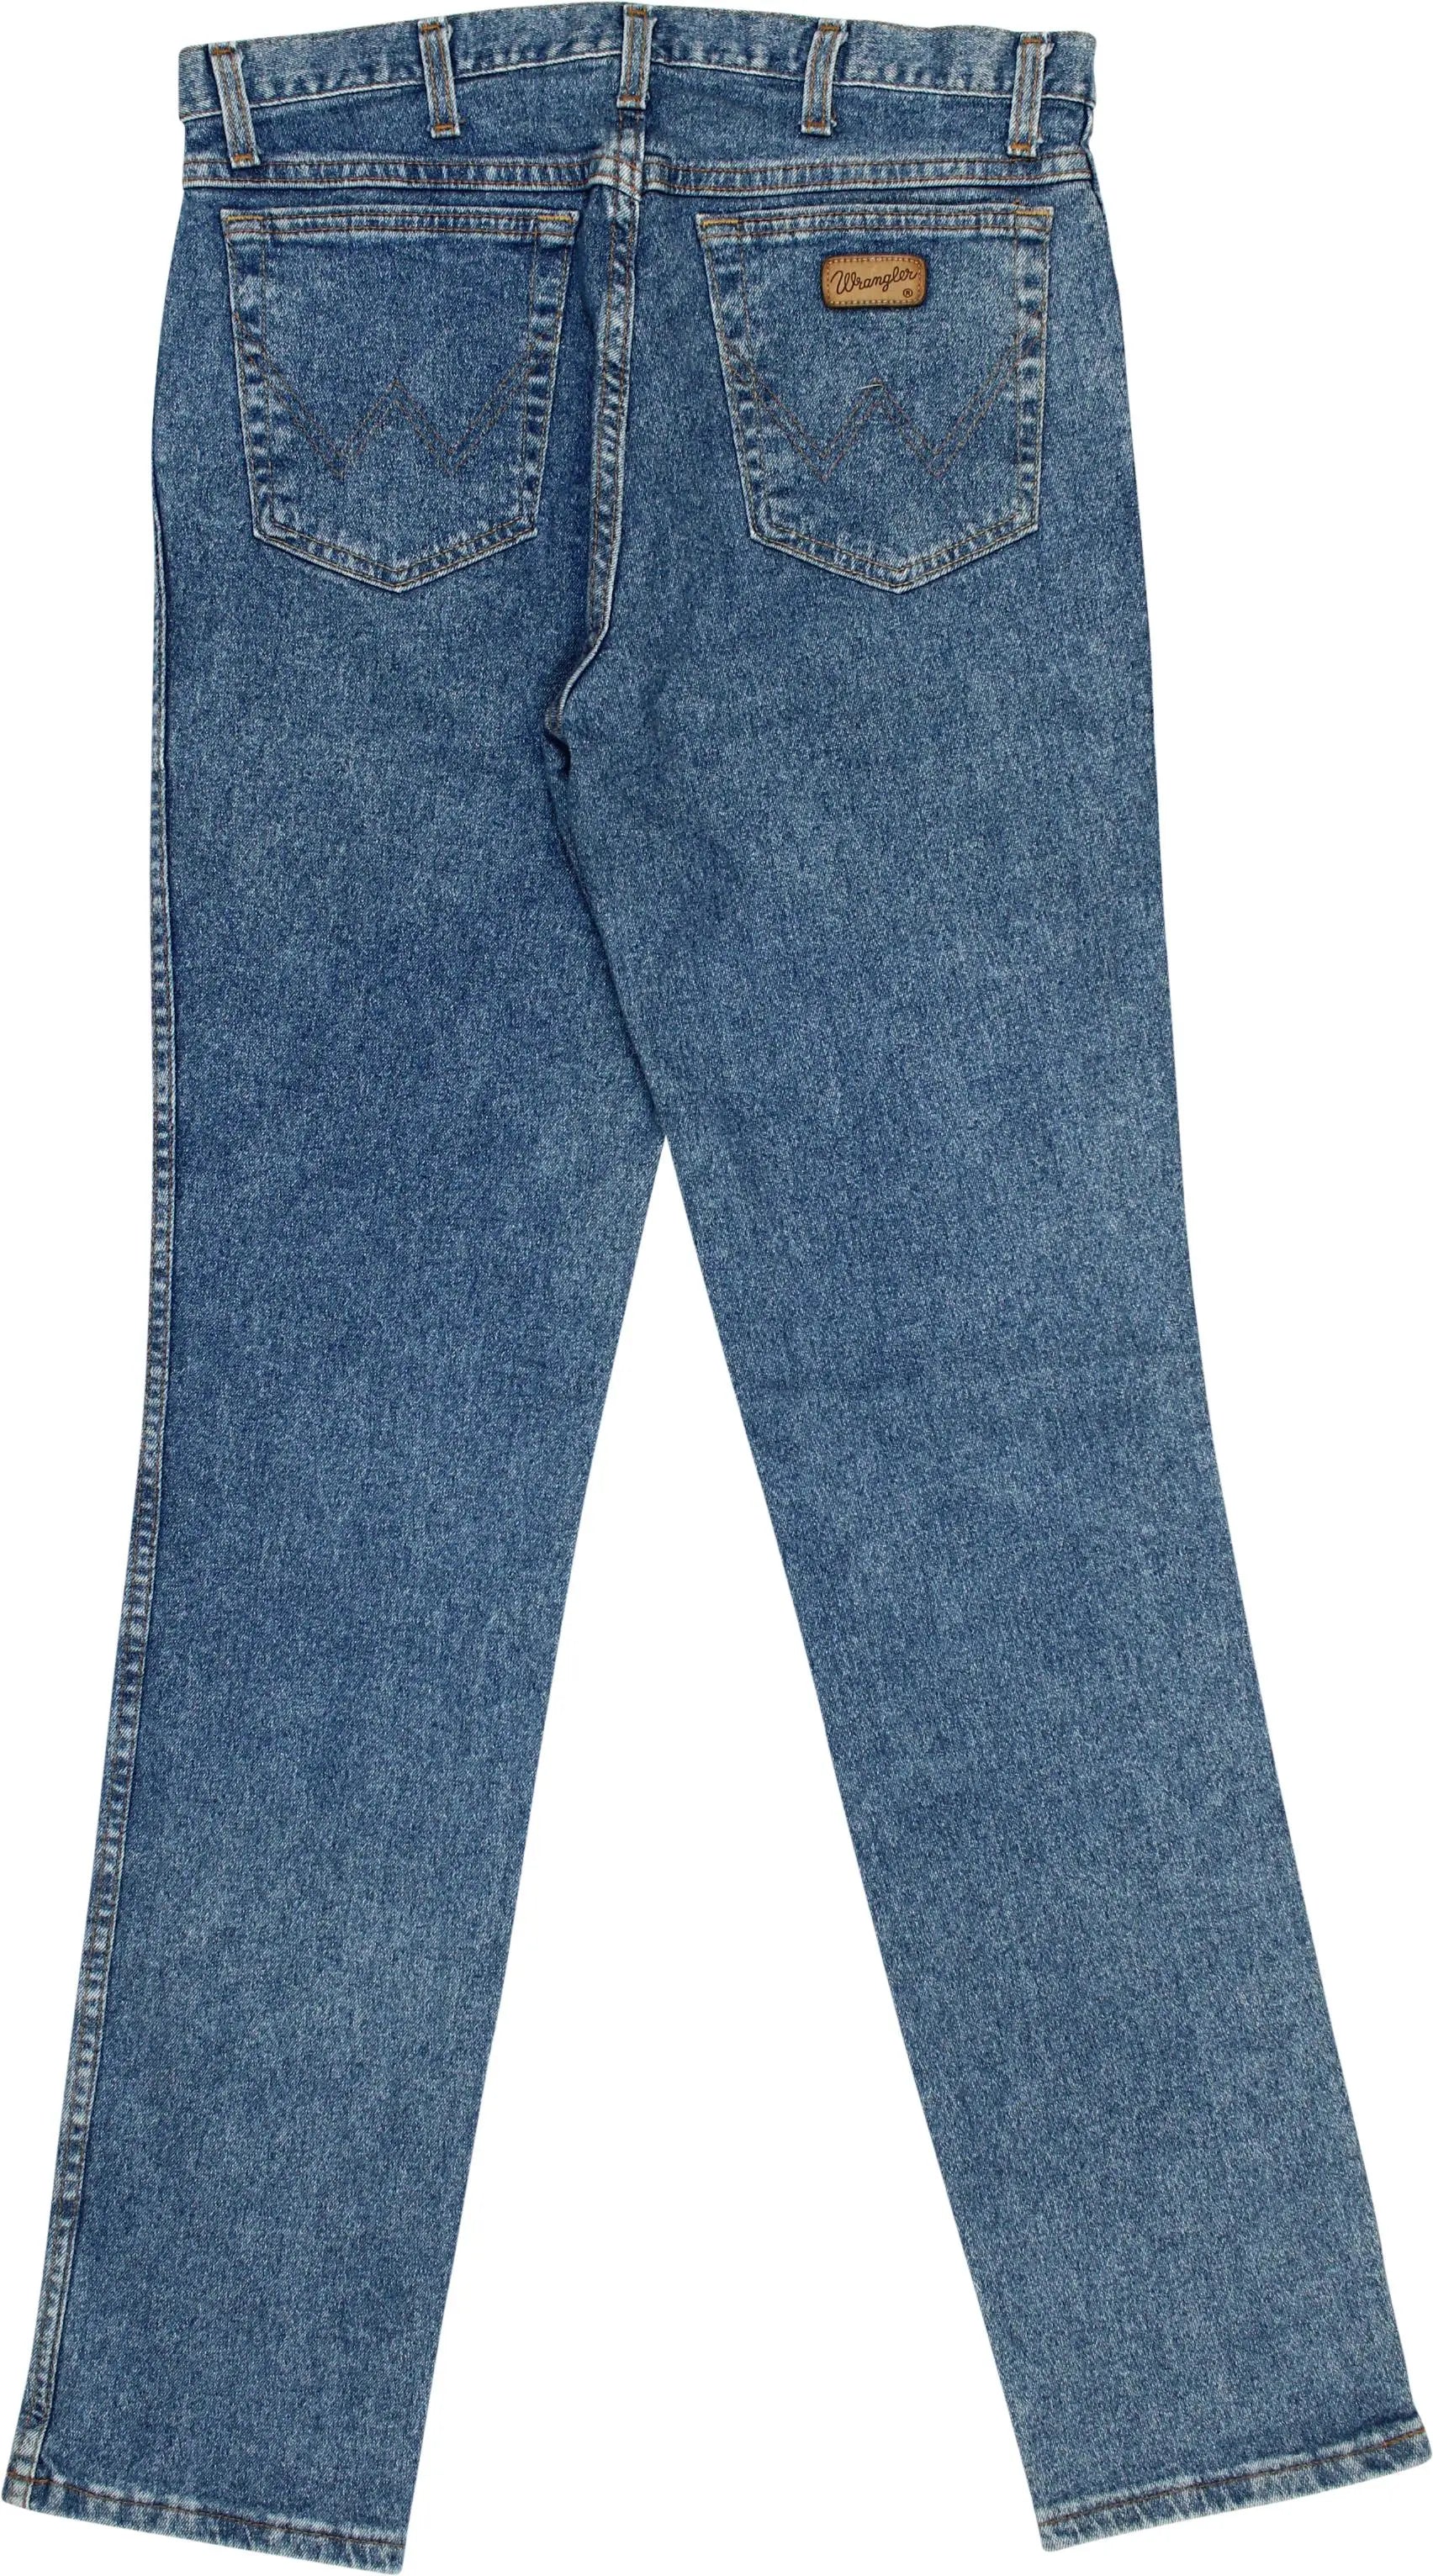 Wrangler - Wrangler Nevada Slim Fit Jeans- ThriftTale.com - Vintage and second handclothing